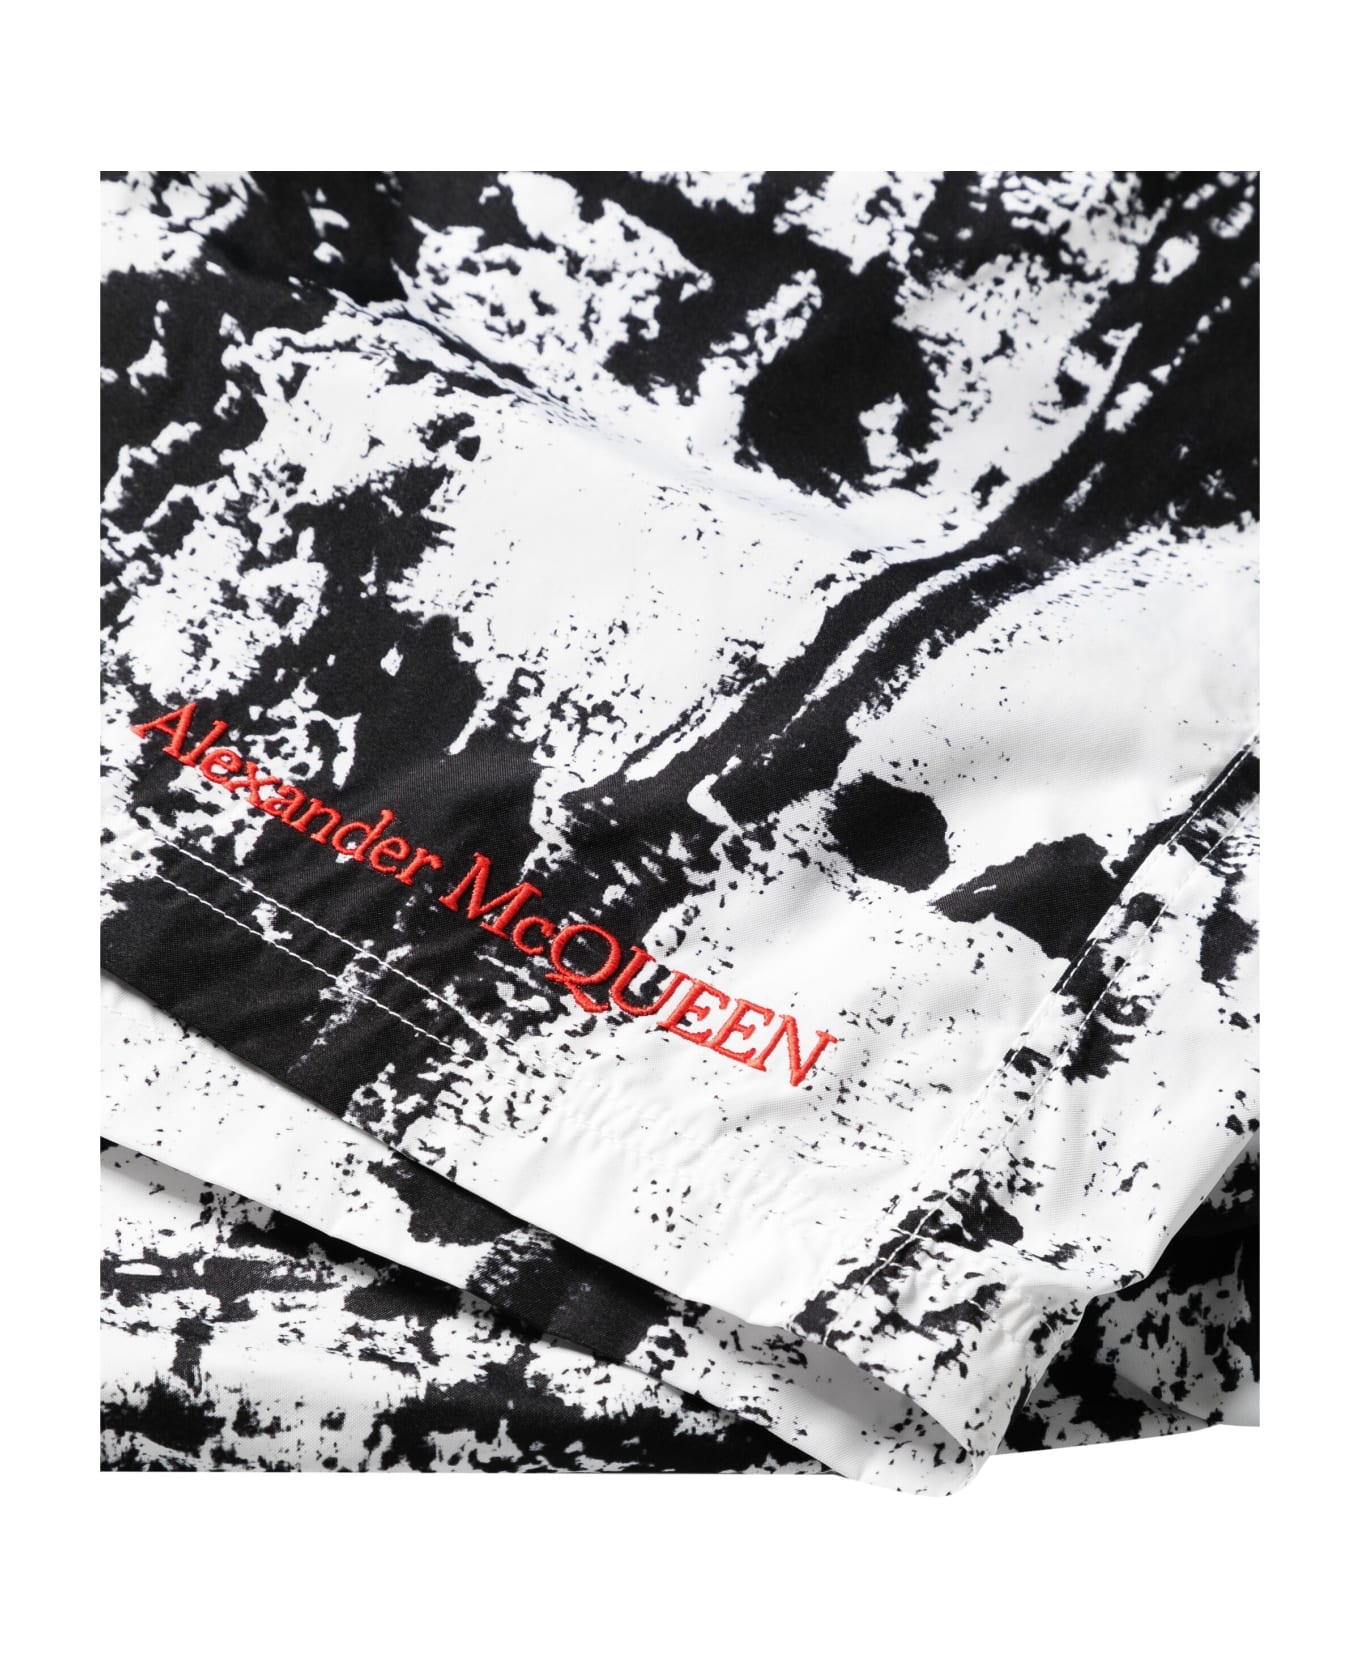 Alexander McQueen Abstract Print Swim Shorts - White Black